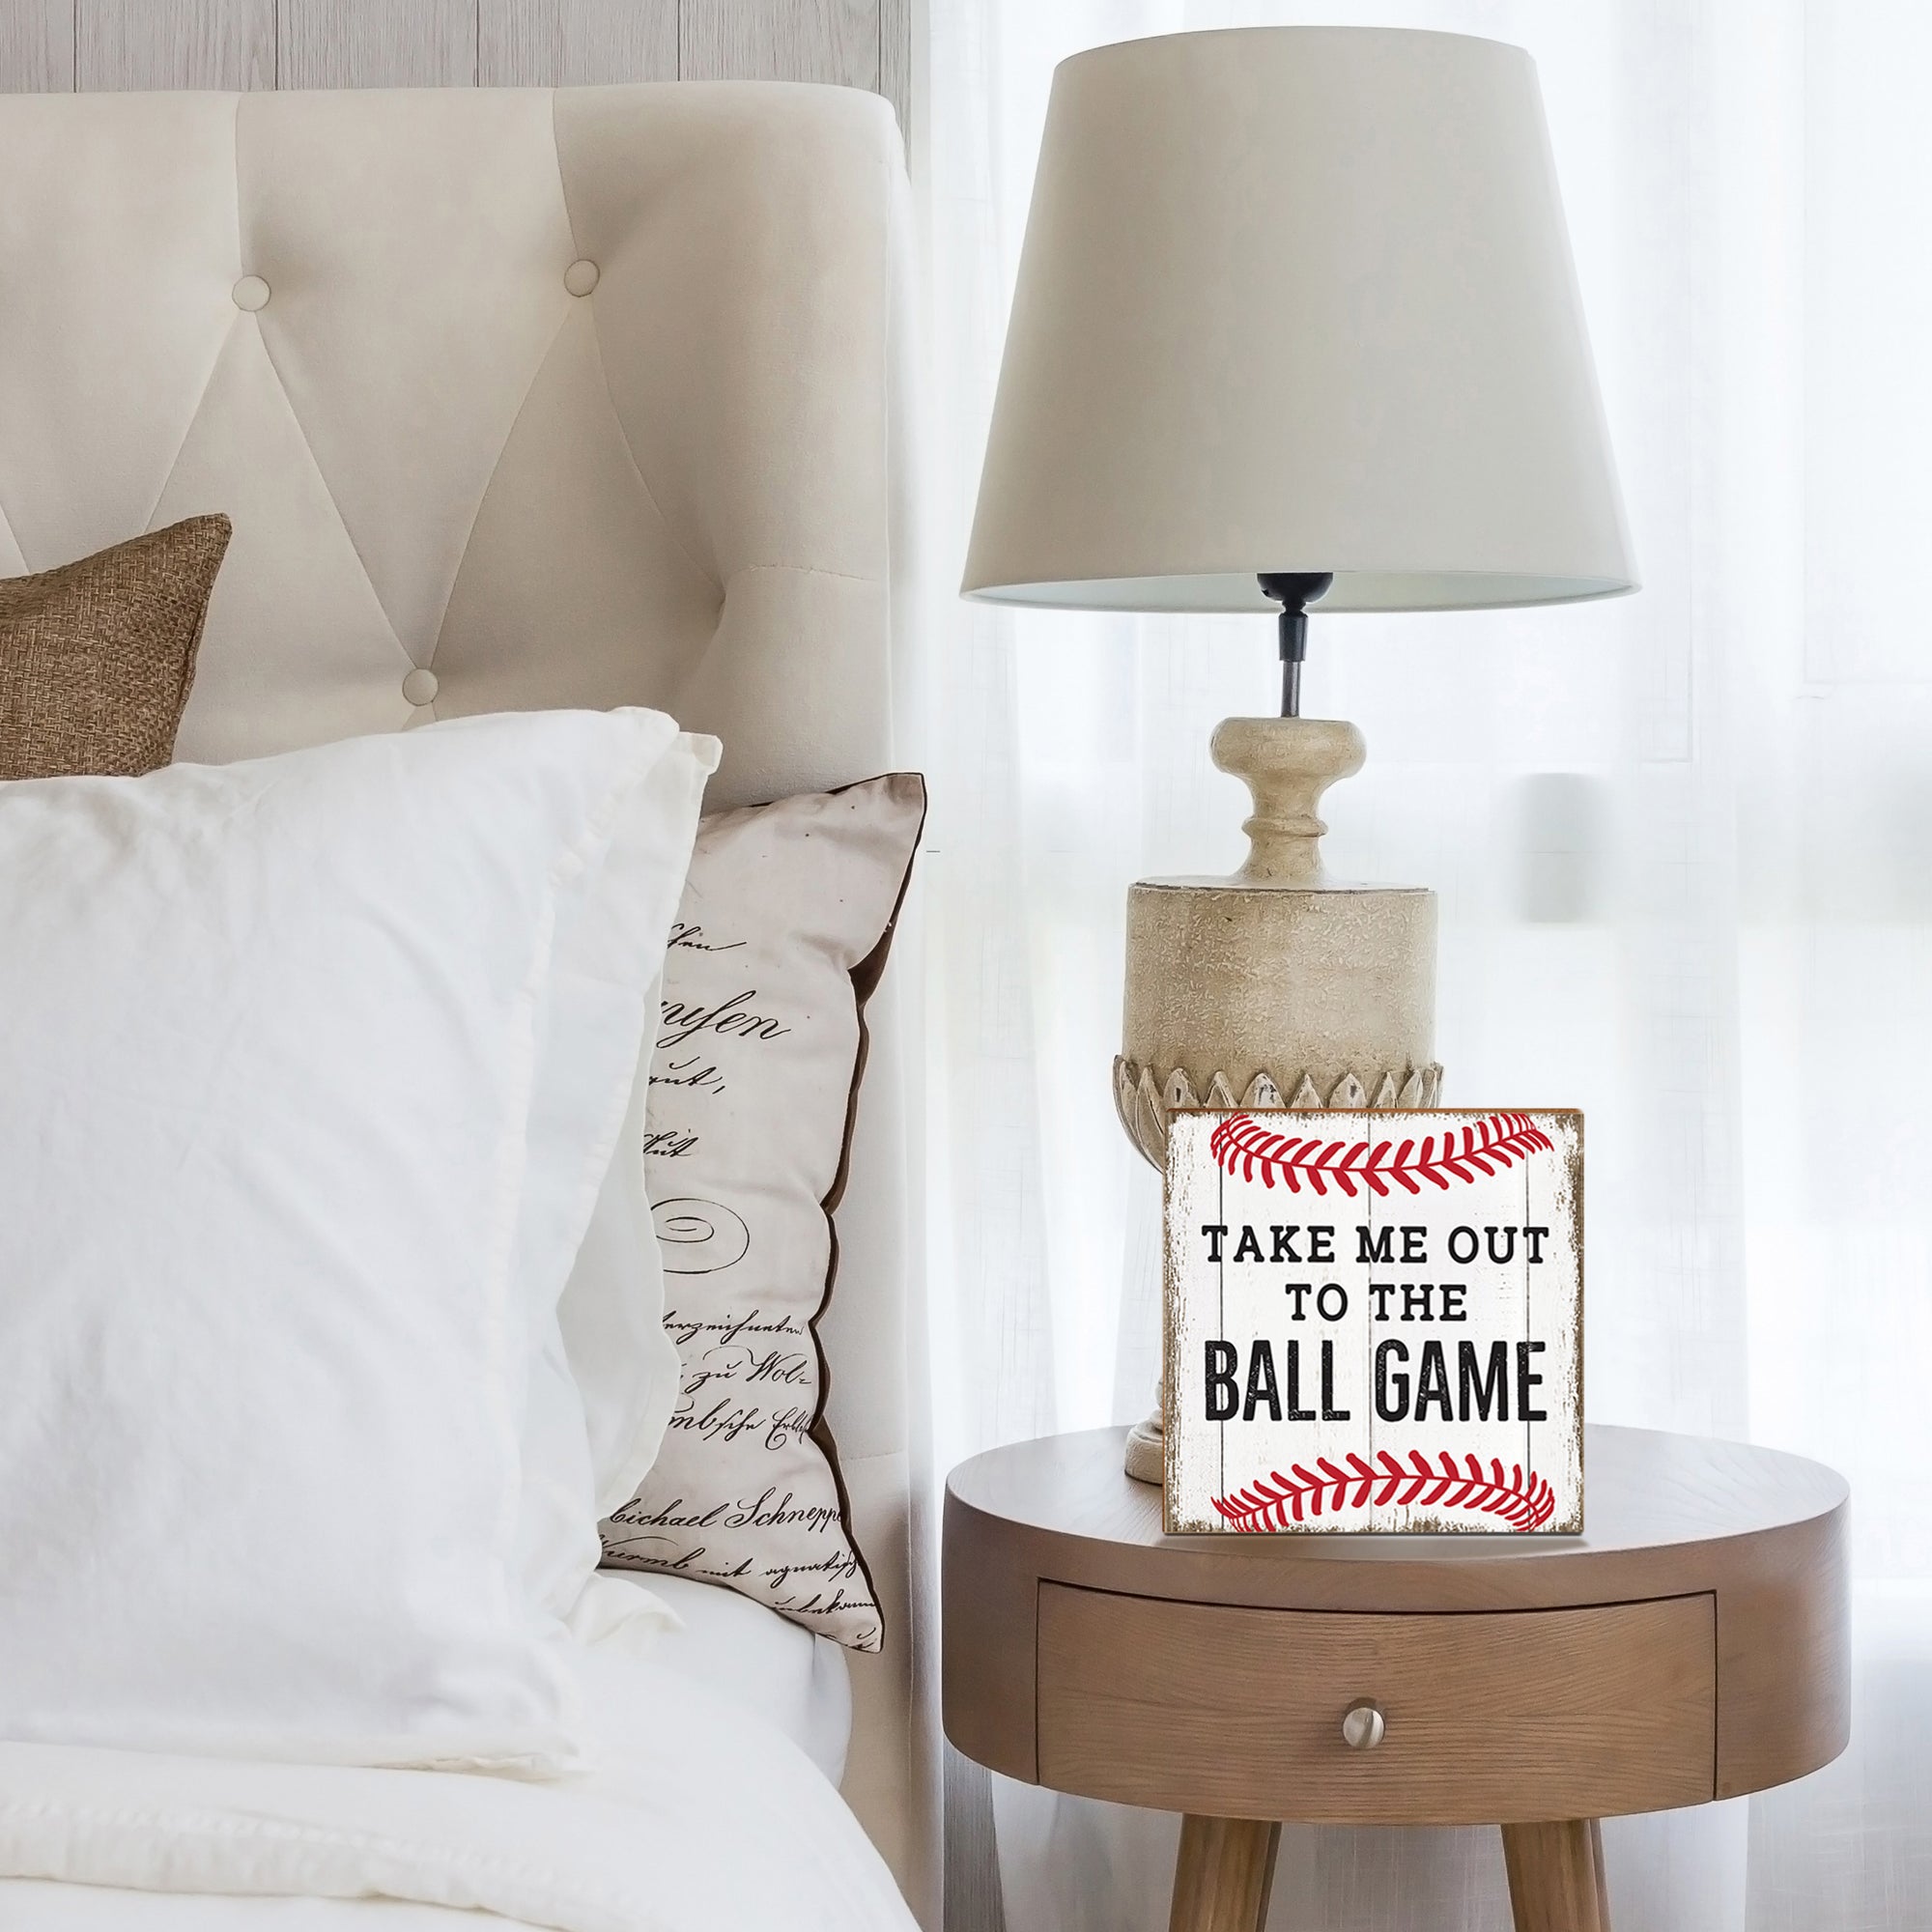 Elegant baseball design, perfect for living room or home office décor.